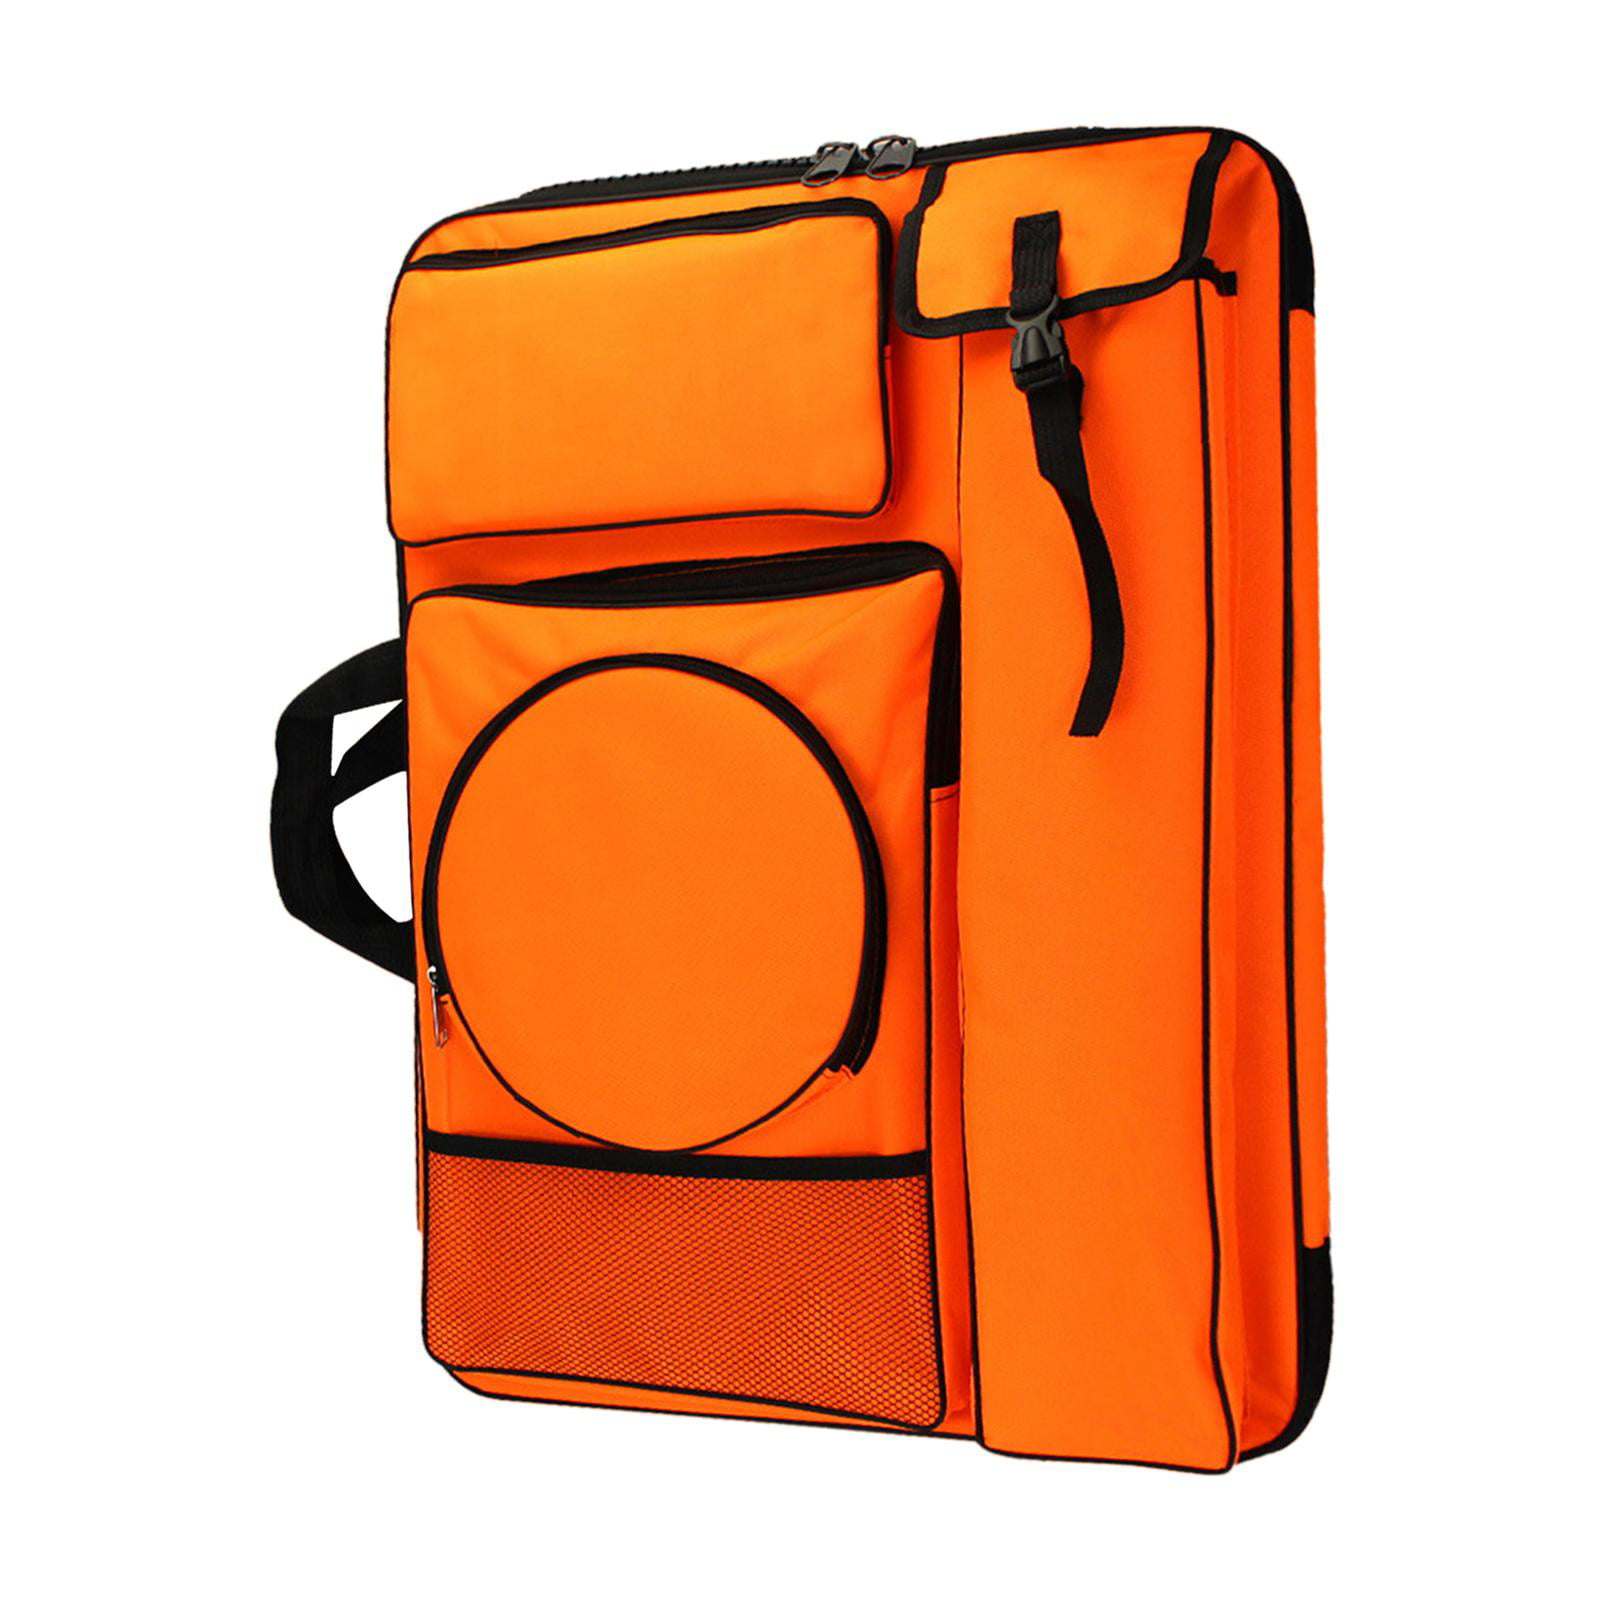 Art Portfolio Case,Art Portfolio Bag 18x24, Artist Backpack for  supplies/Artwork